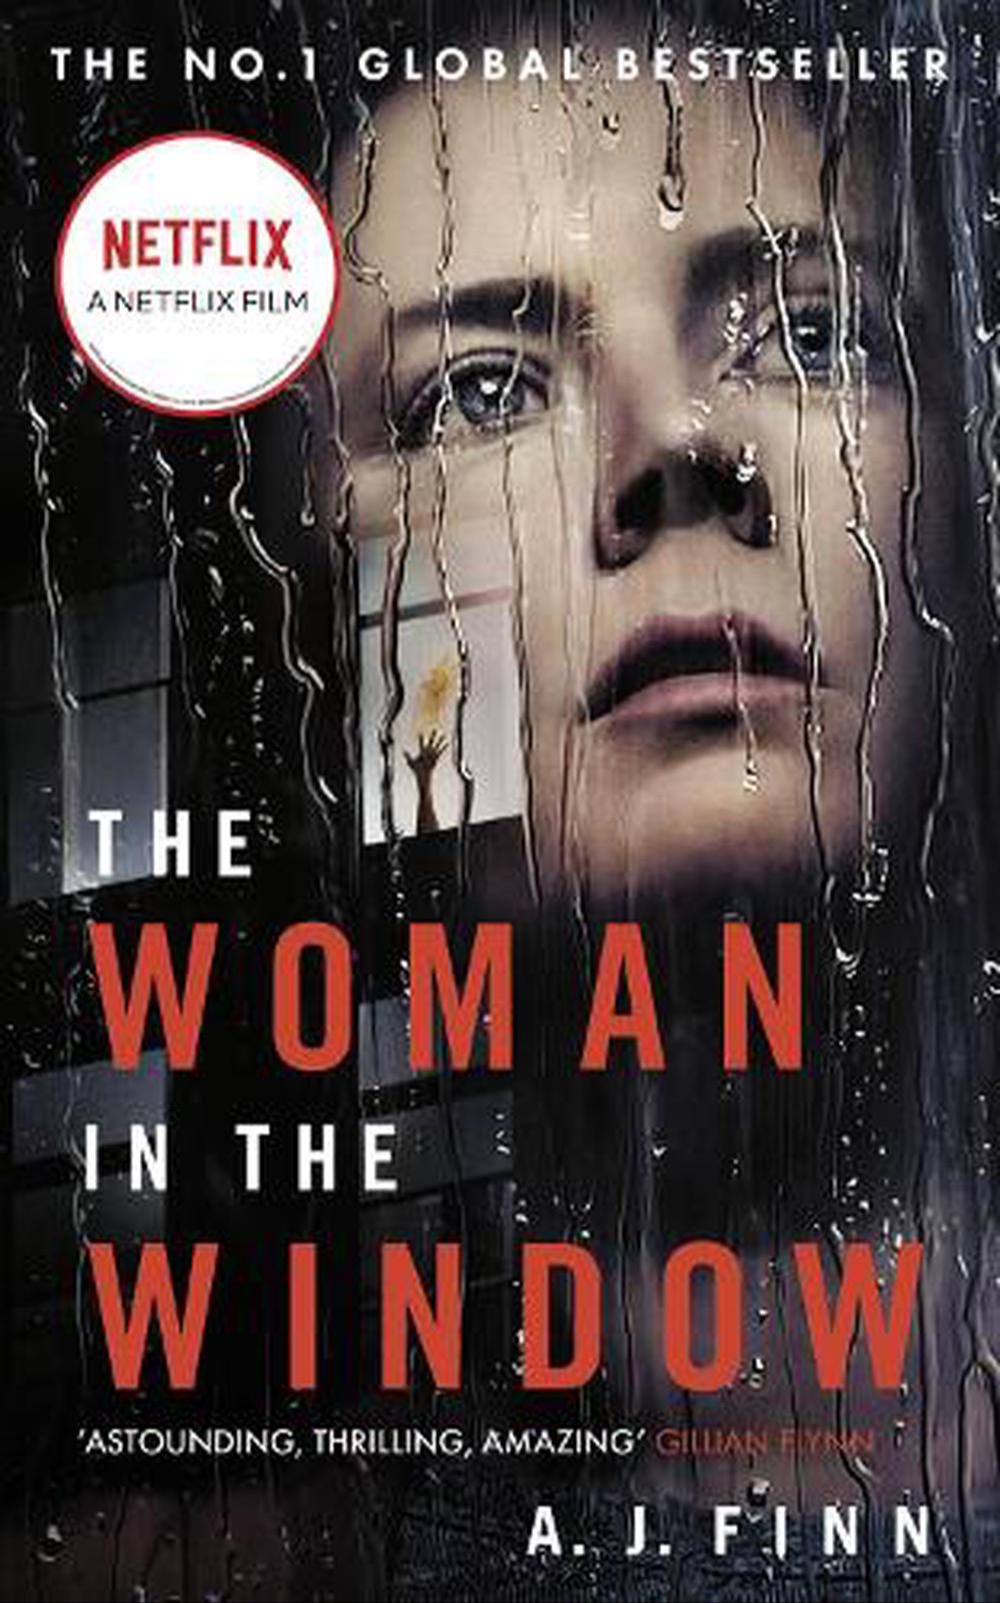 The woman in the window - AJ Finn